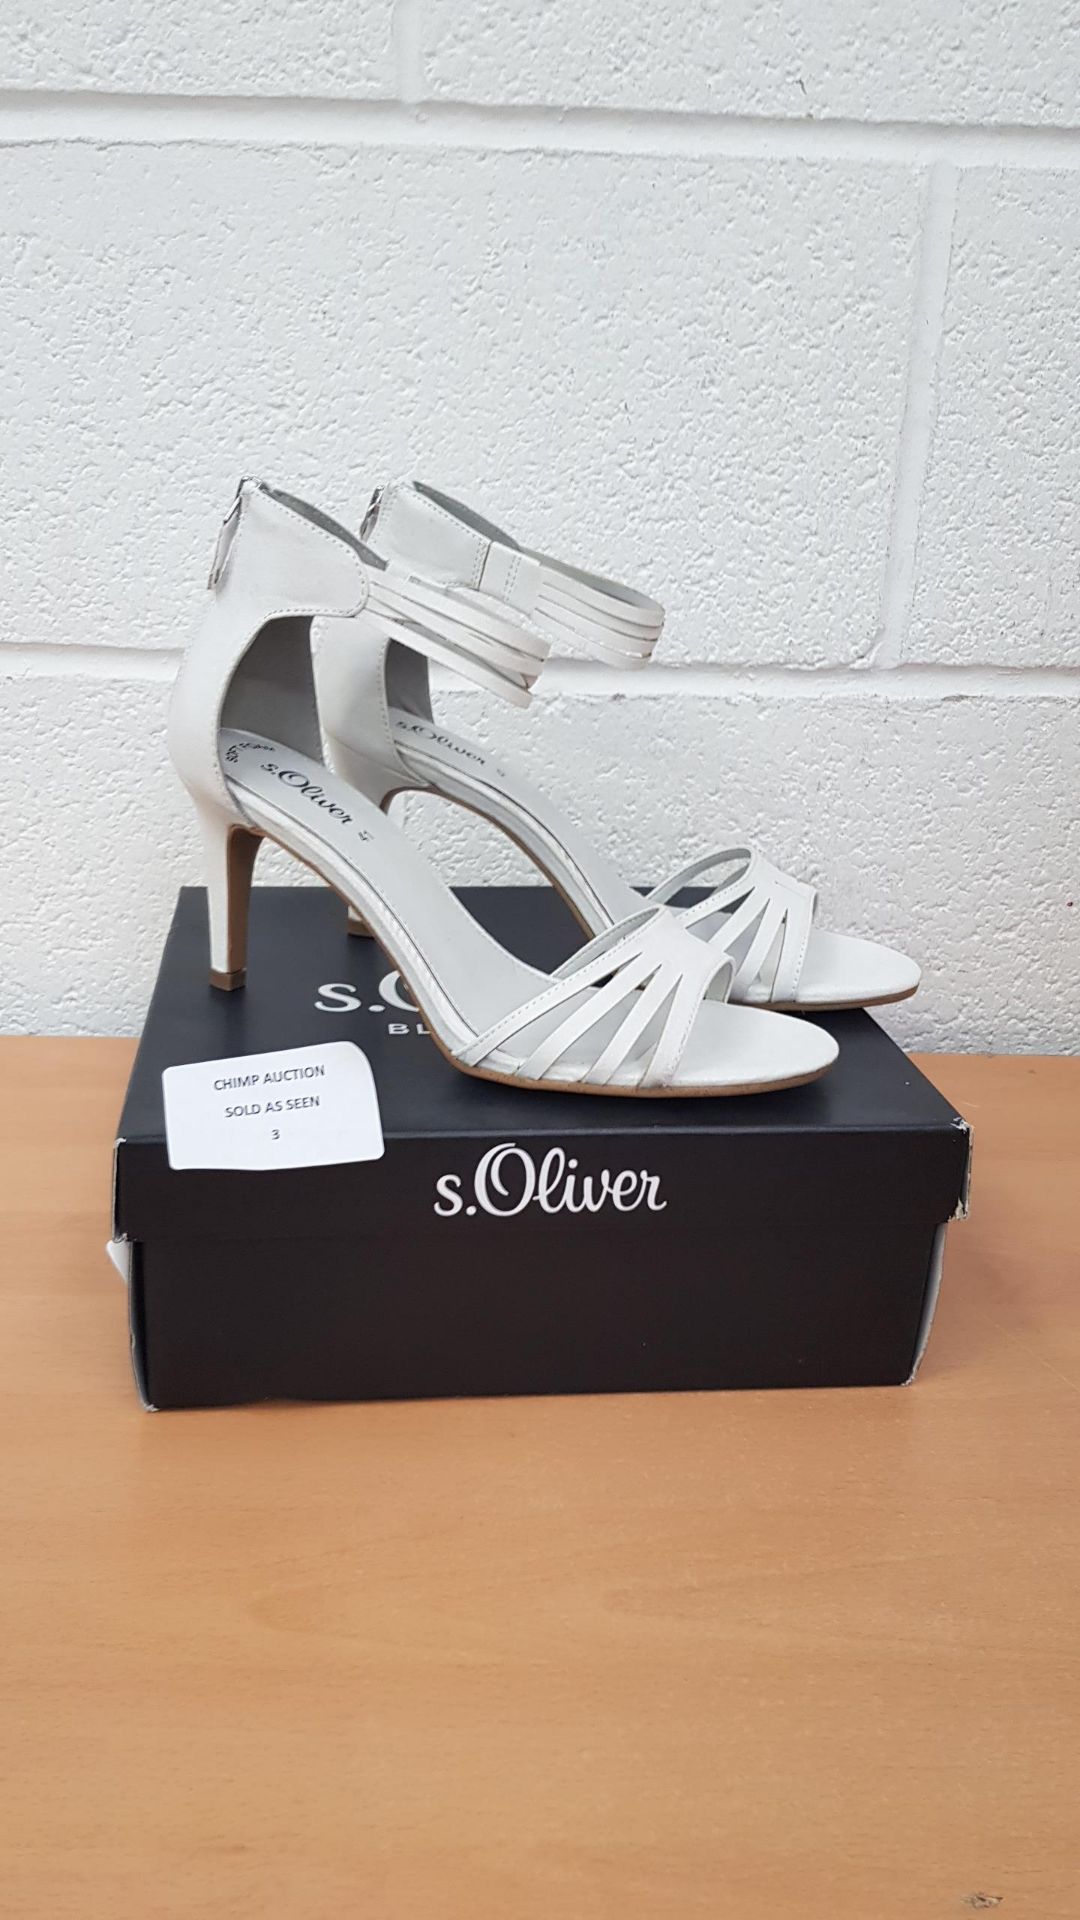 S.Oliver 5-28331 Ladies shoes UK SIZE 8